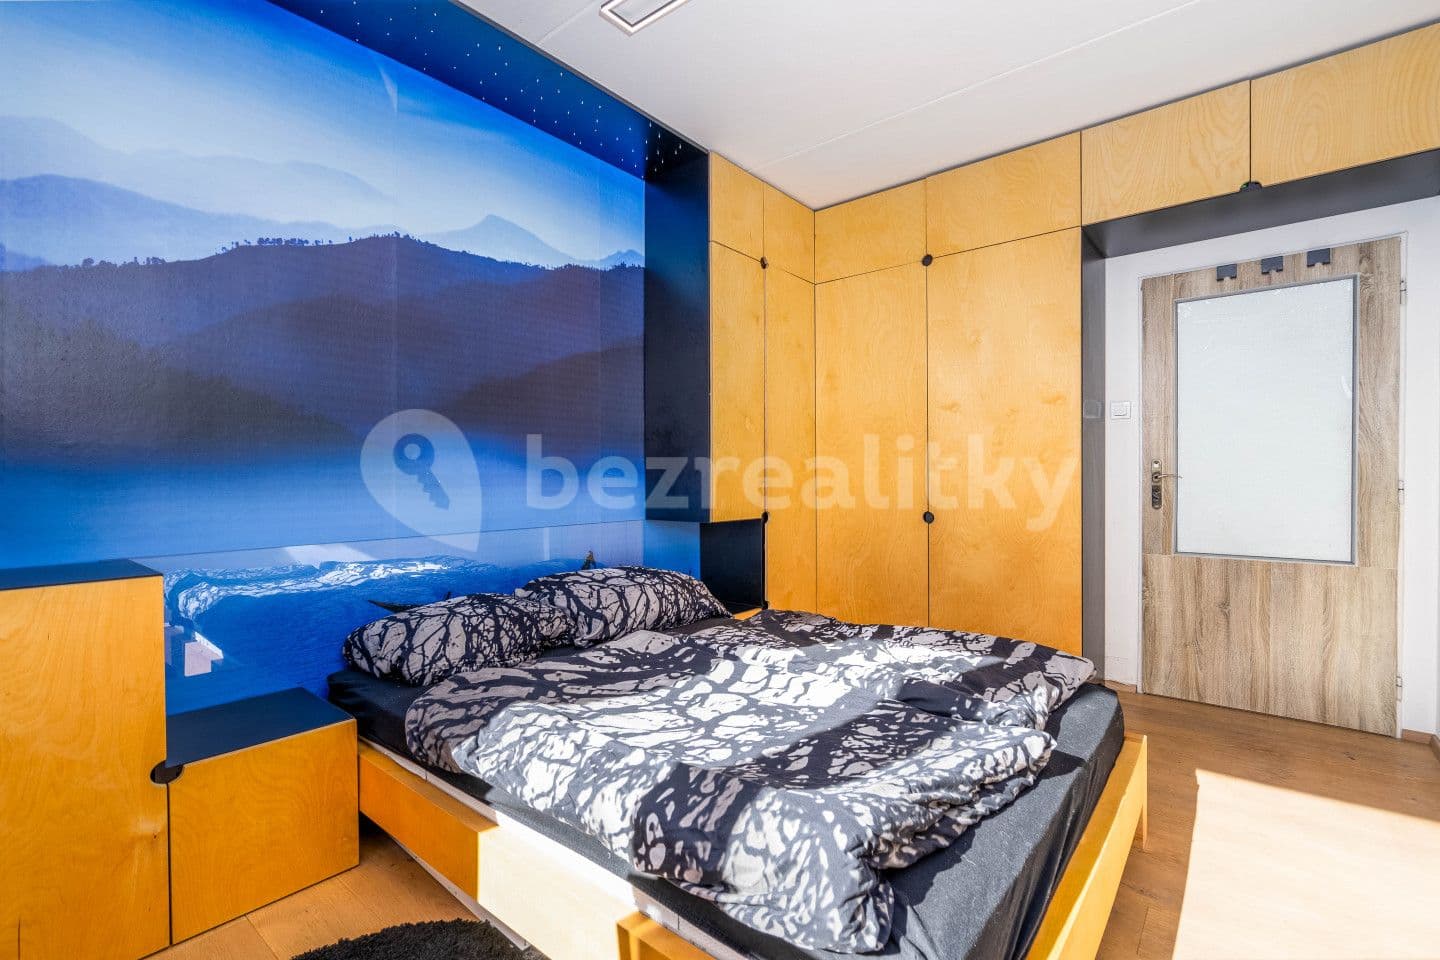 1 bedroom with open-plan kitchen flat for sale, 40 m², Makovského, Prague, Prague